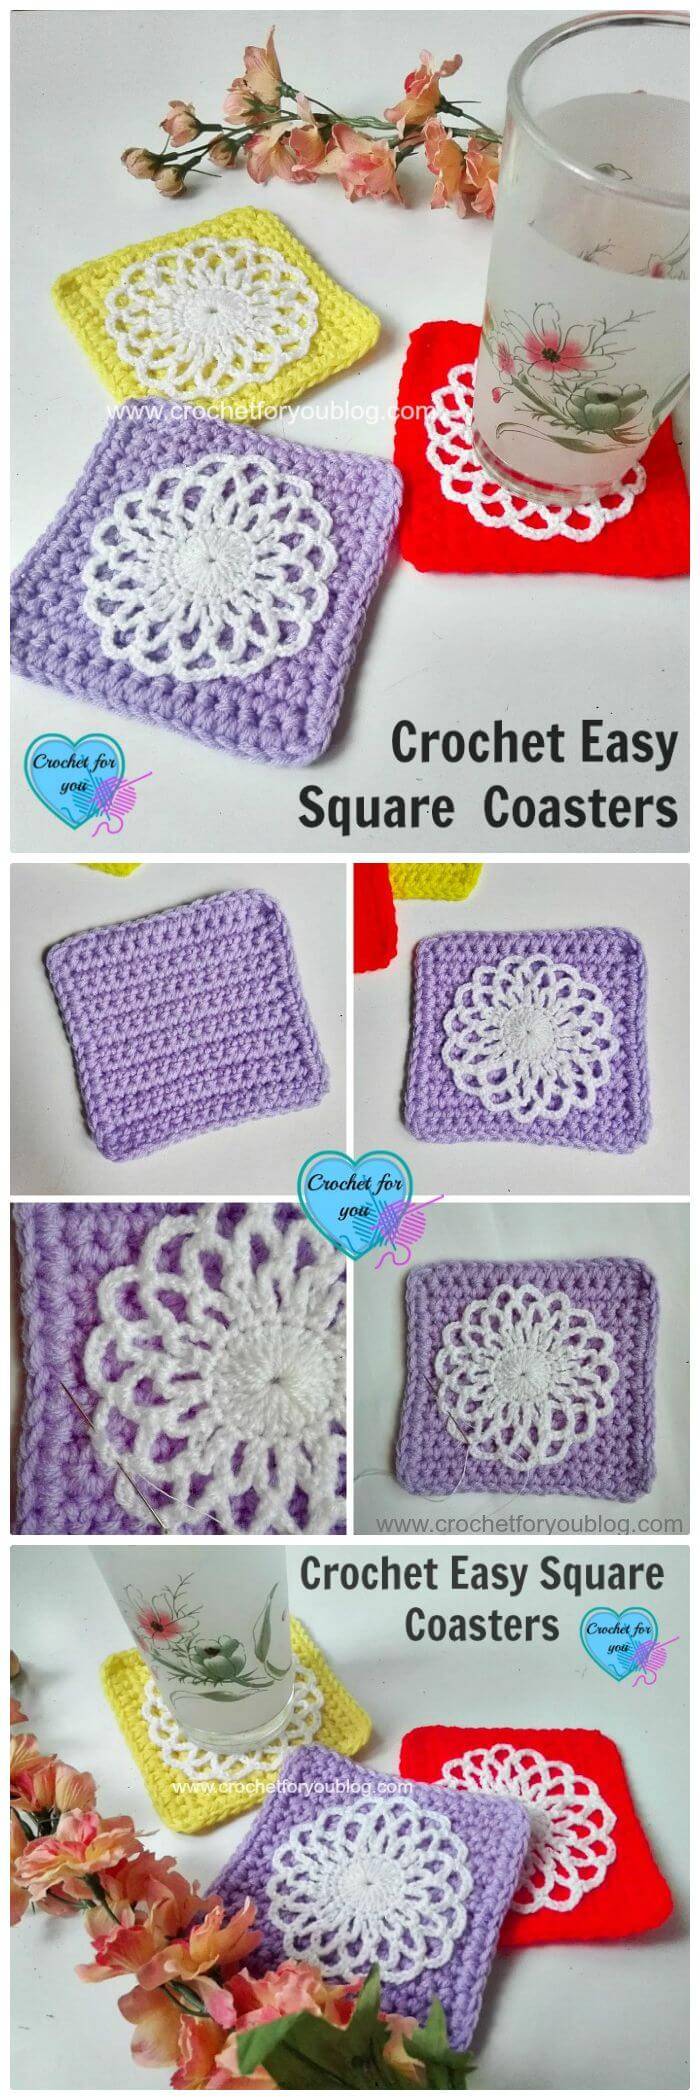 DIY Free Crochet Easy Square Coaster Pattern, Free easy crochet coaster patterns for crochet lovers!